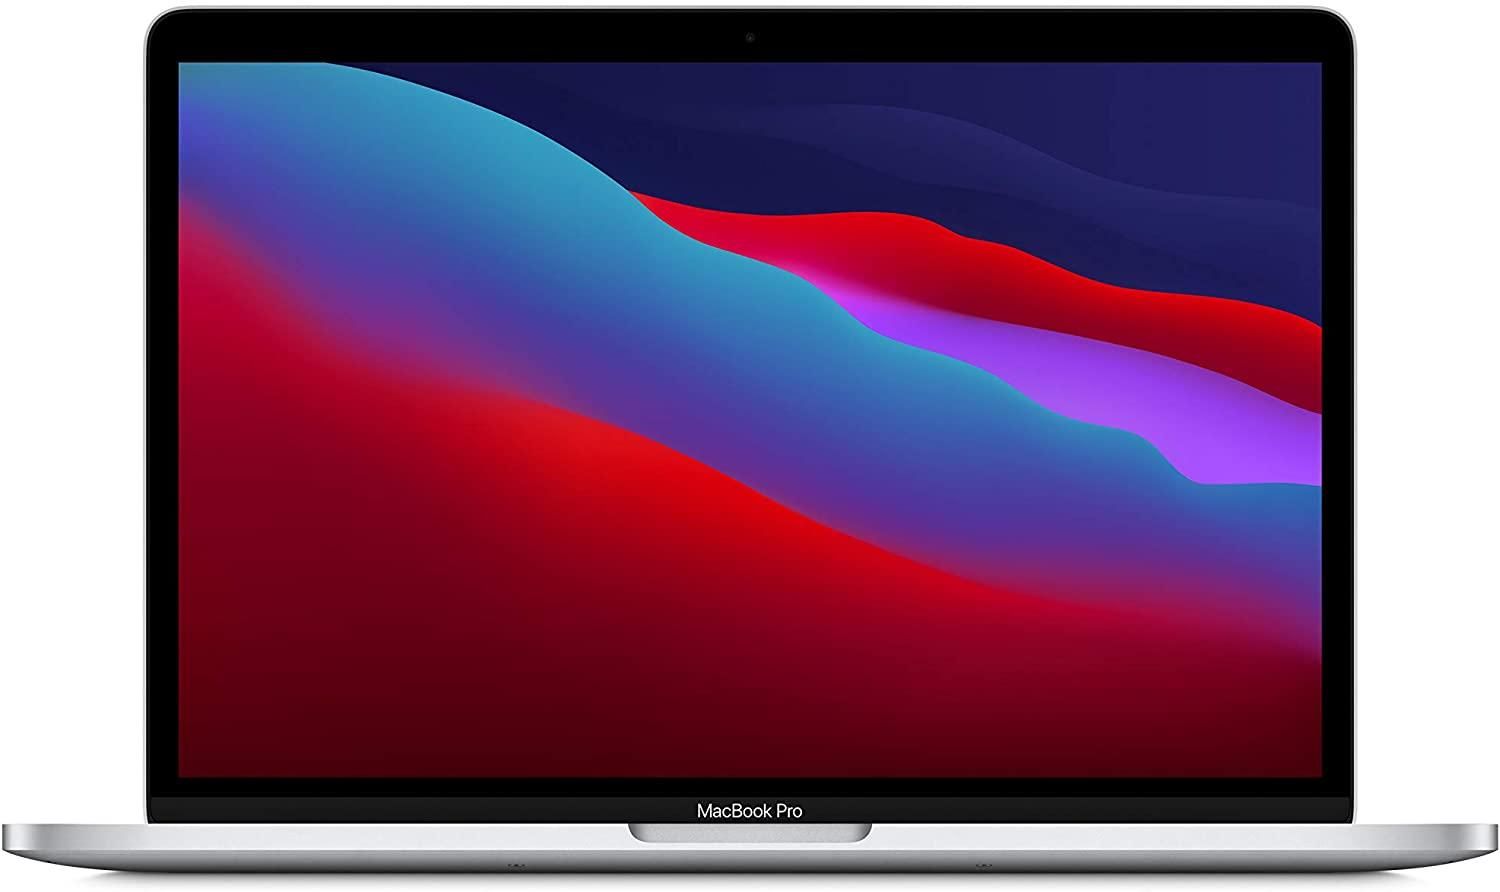 13 inch MacBook Pro product box photo